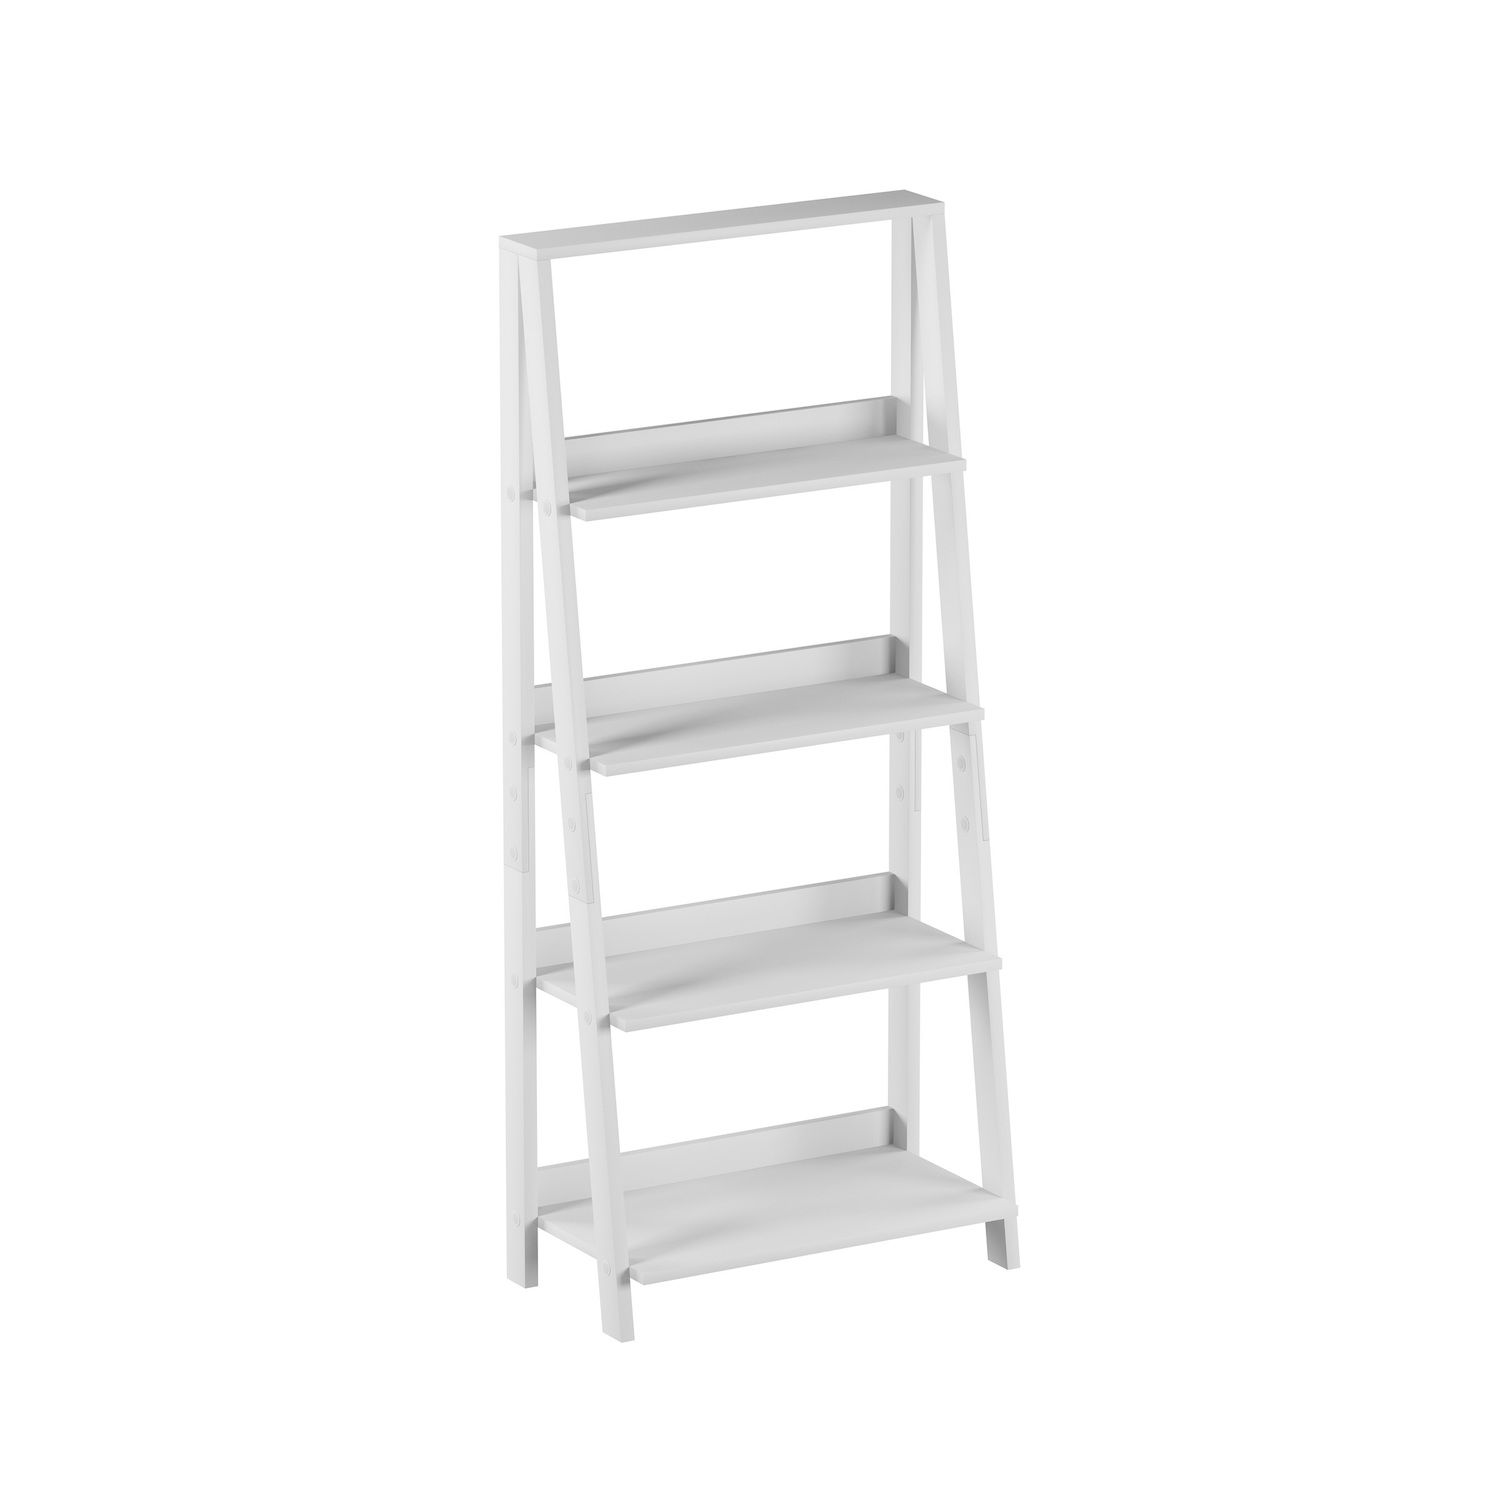 Image for Lavish Home 4-Tier Ladder Bookshelf at Kohl's.